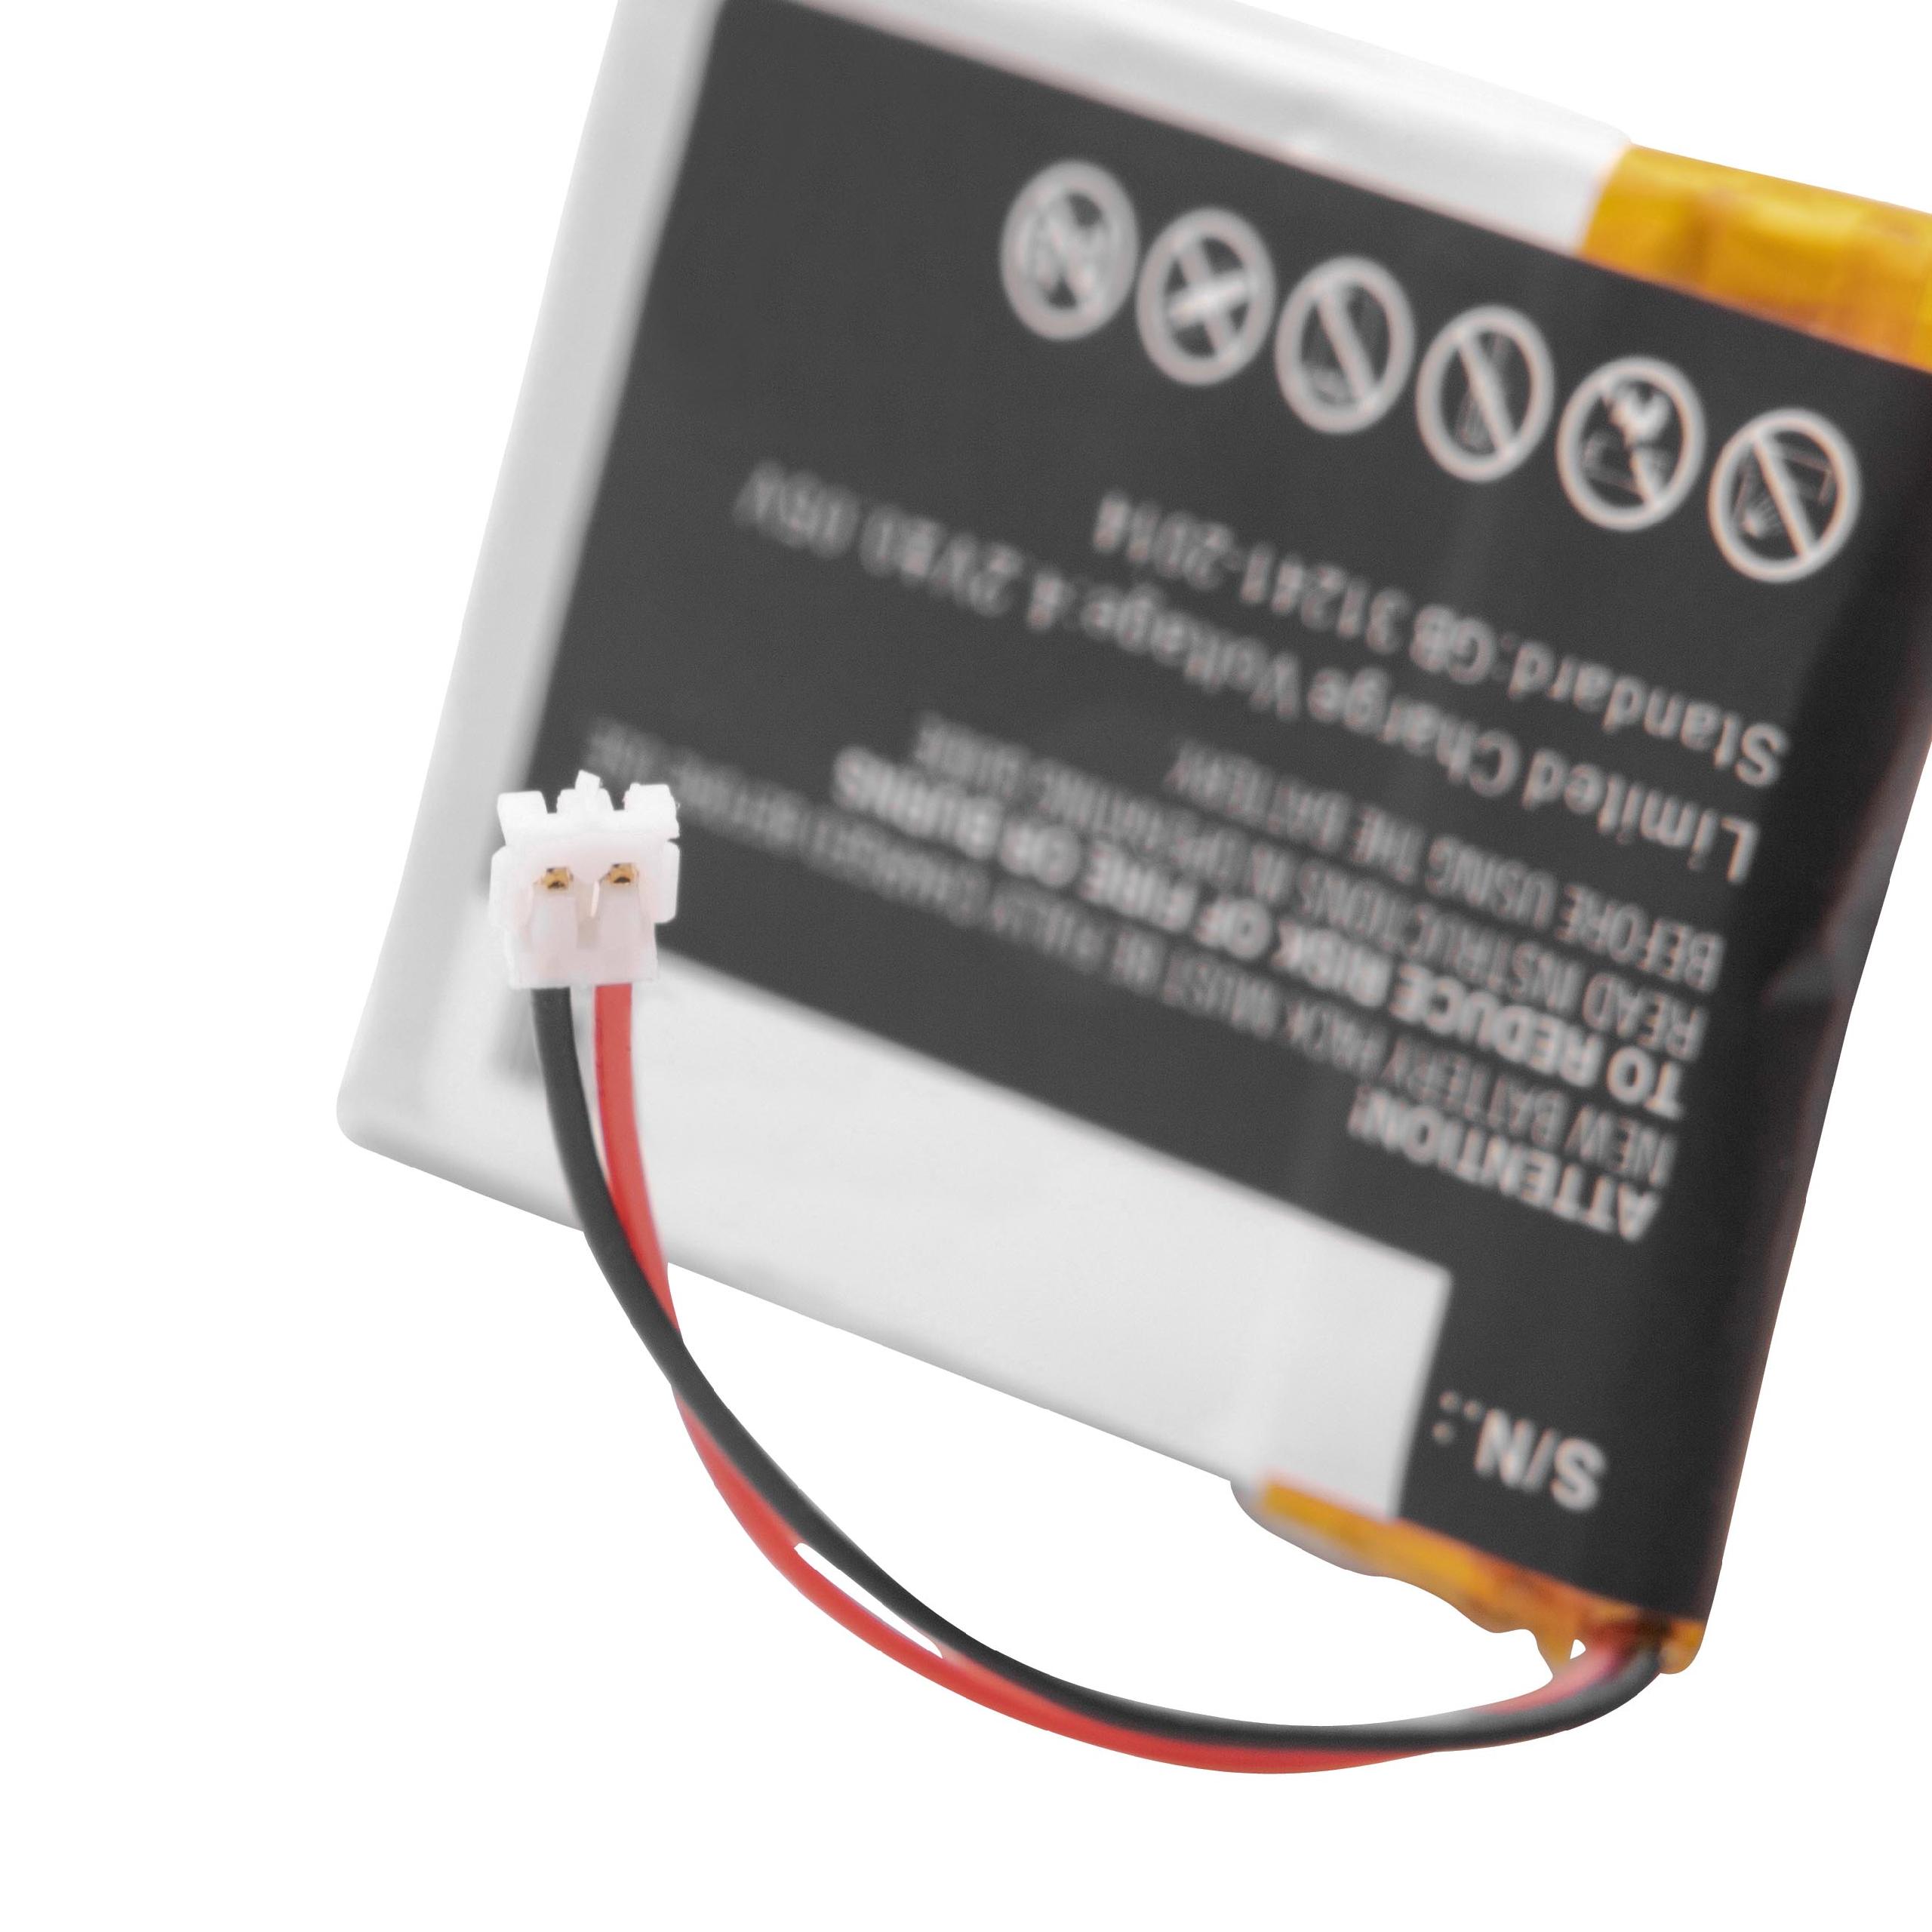 Smartwatch Battery Replacement for Garmin 361-00078-00 - 300mAh 3.7V Li-polymer